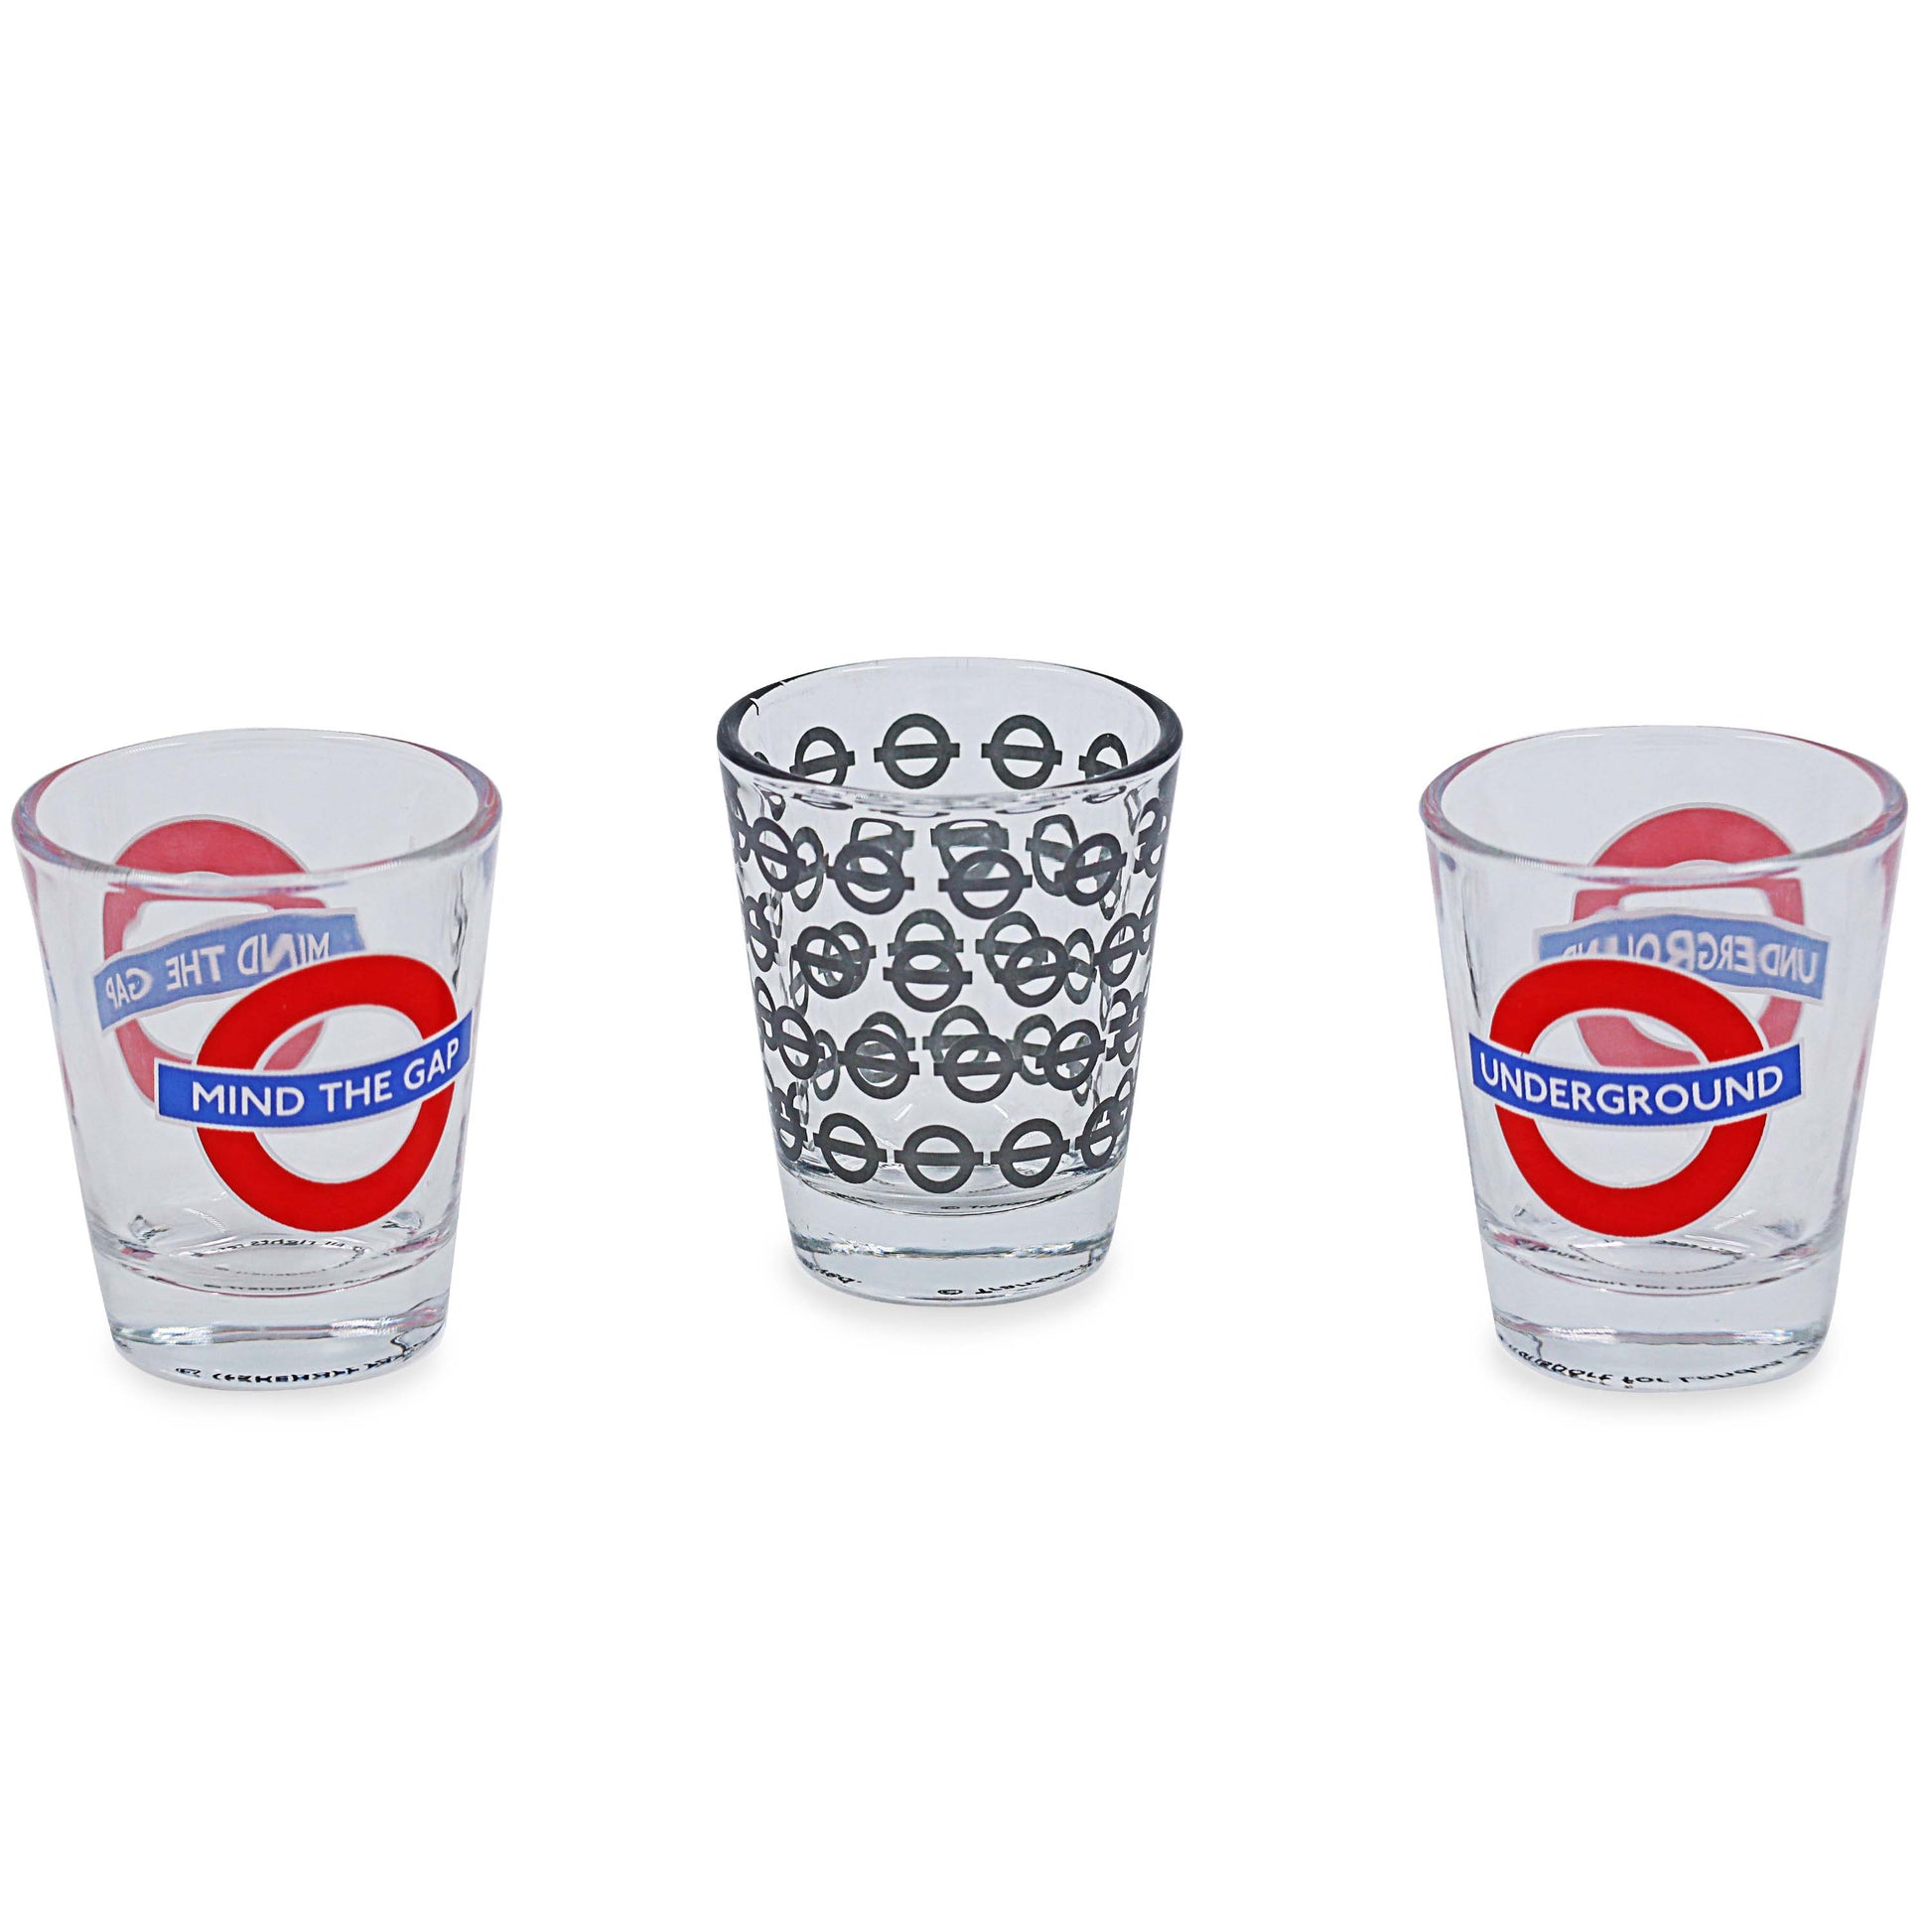 London Underground TfL shot glasses